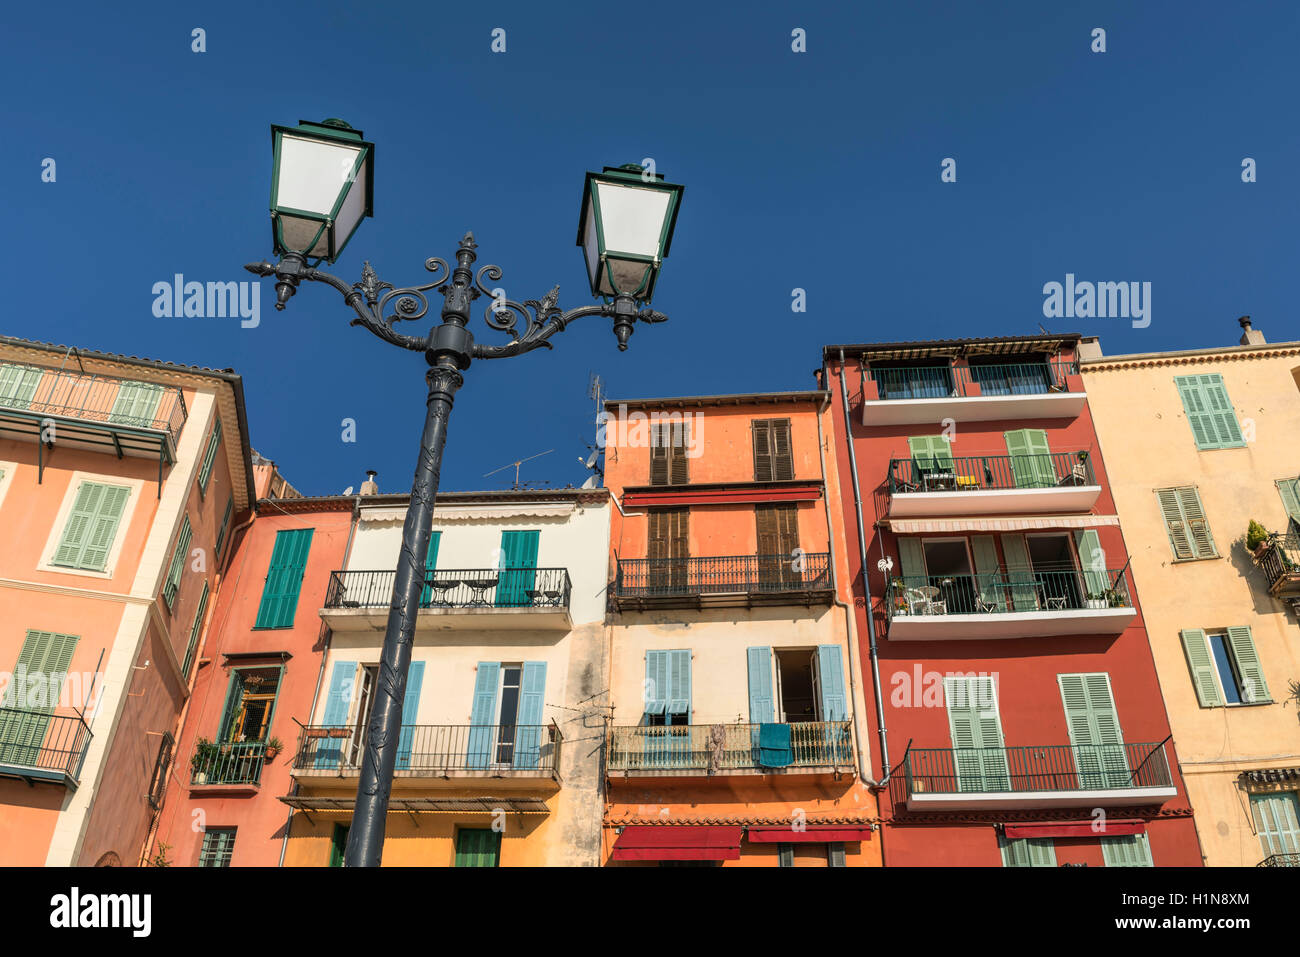 Colorful facades, Villefranche sur mer, Cote d Azur, South of France Stock Photo